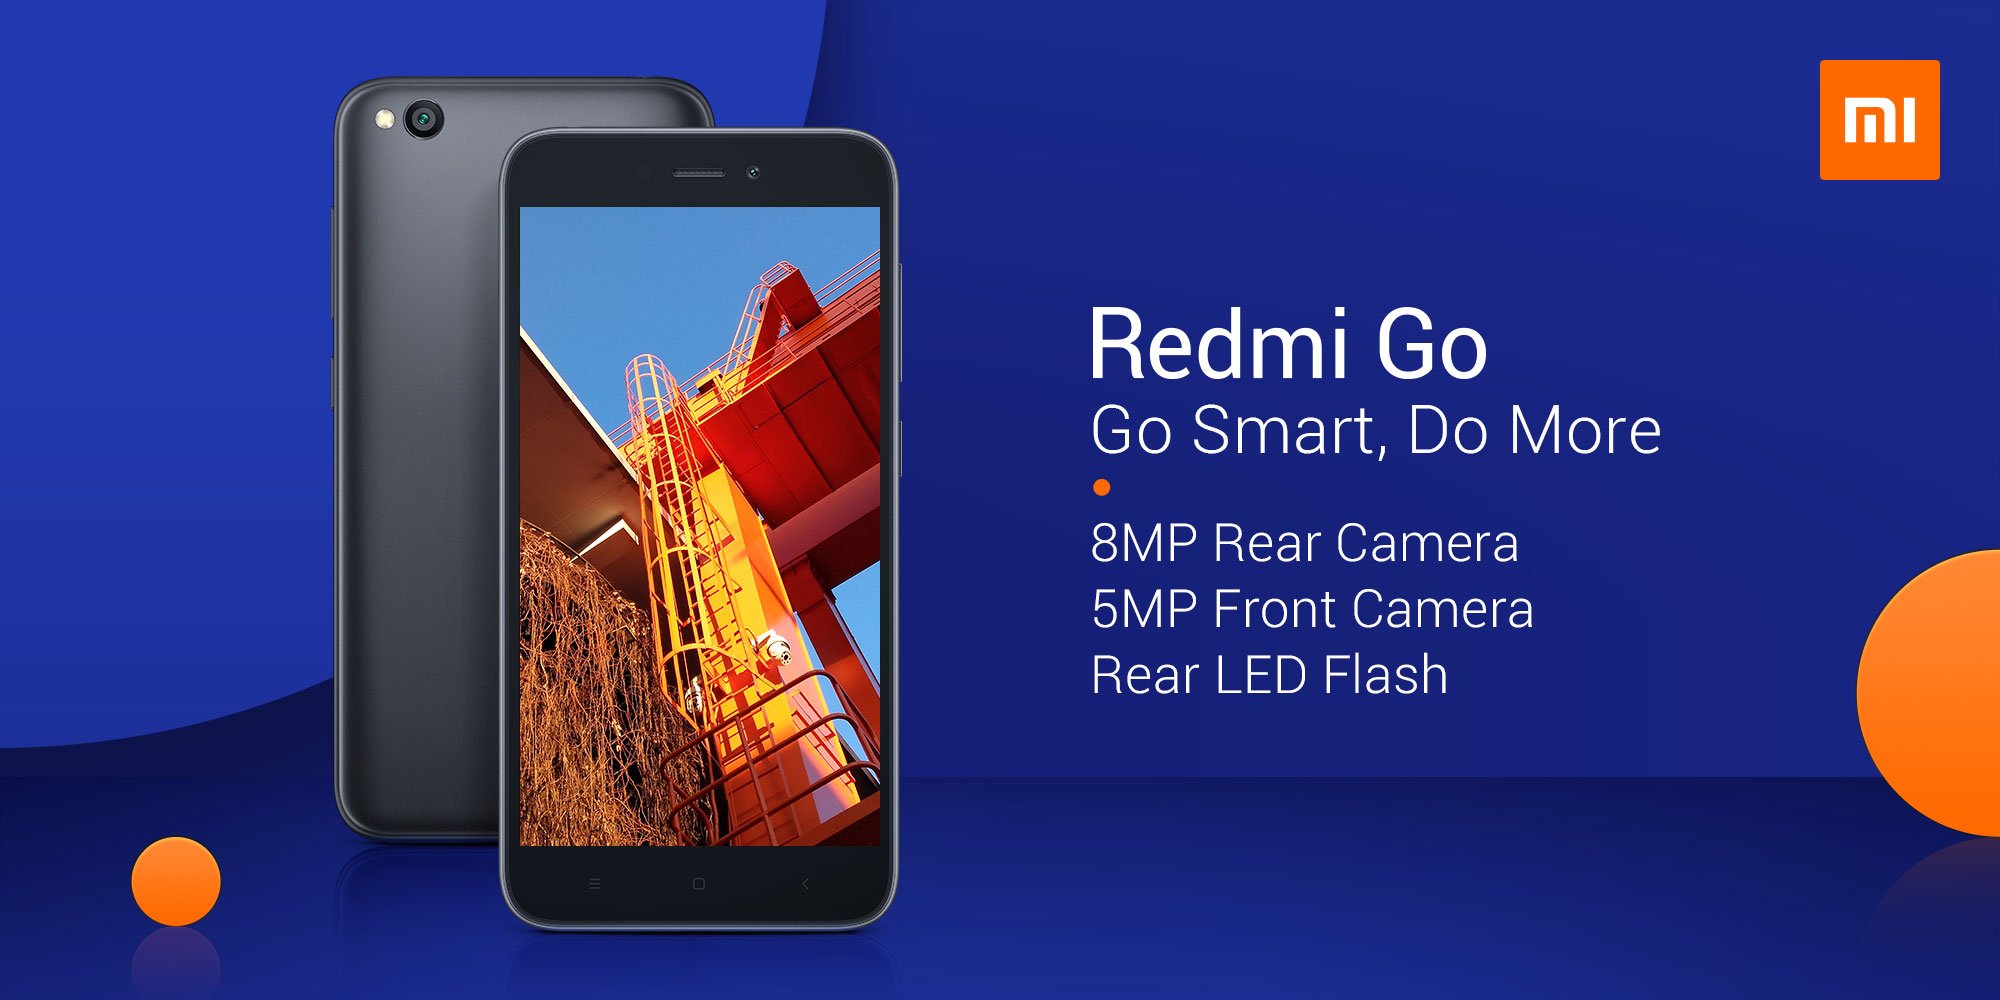 Xiaomi Redmi Go India release / launch date near as firmware goes live